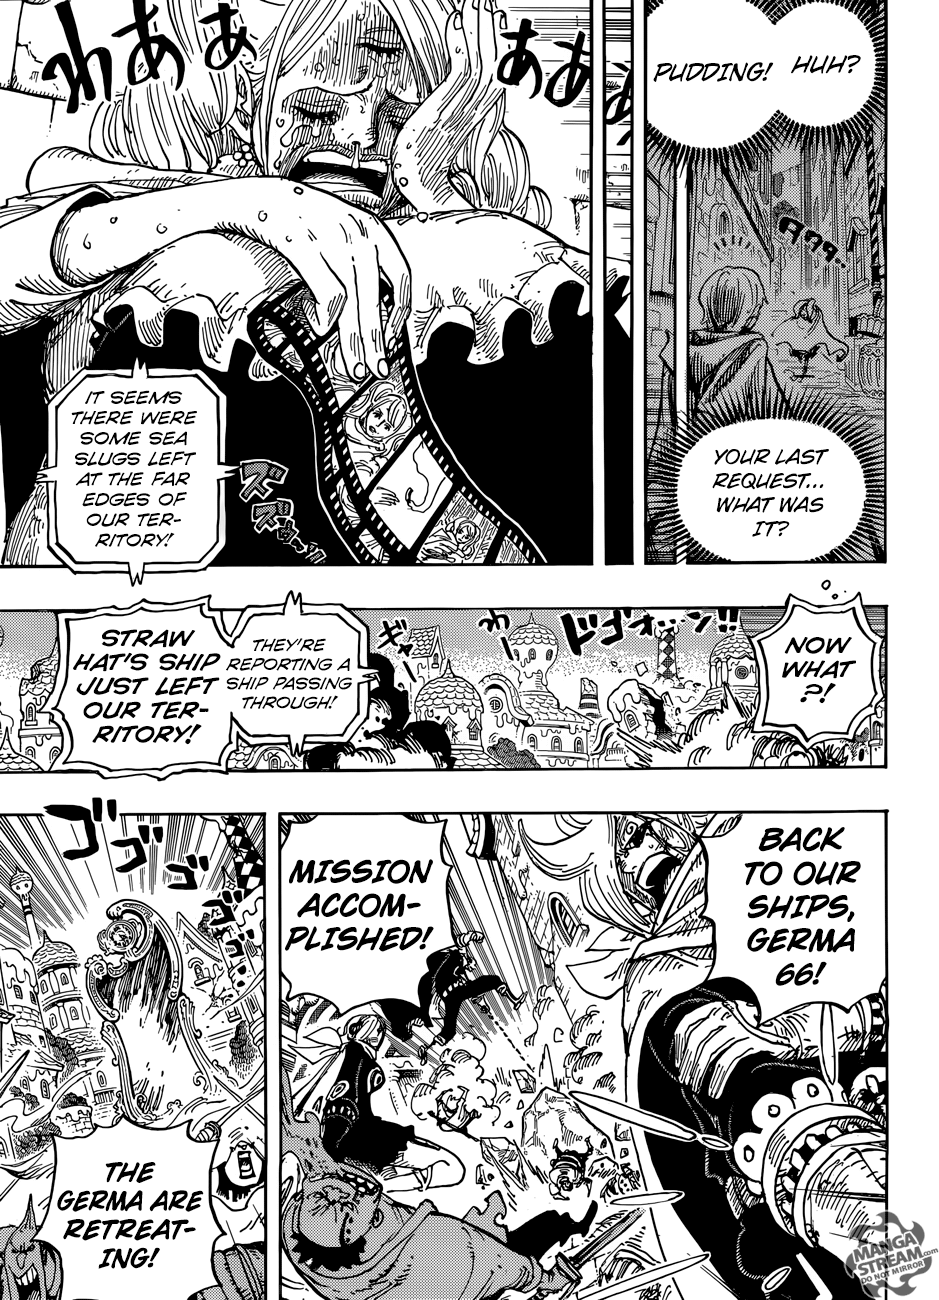 Read One Piece Manga English [New Chapters] Online Free - MangaClash 